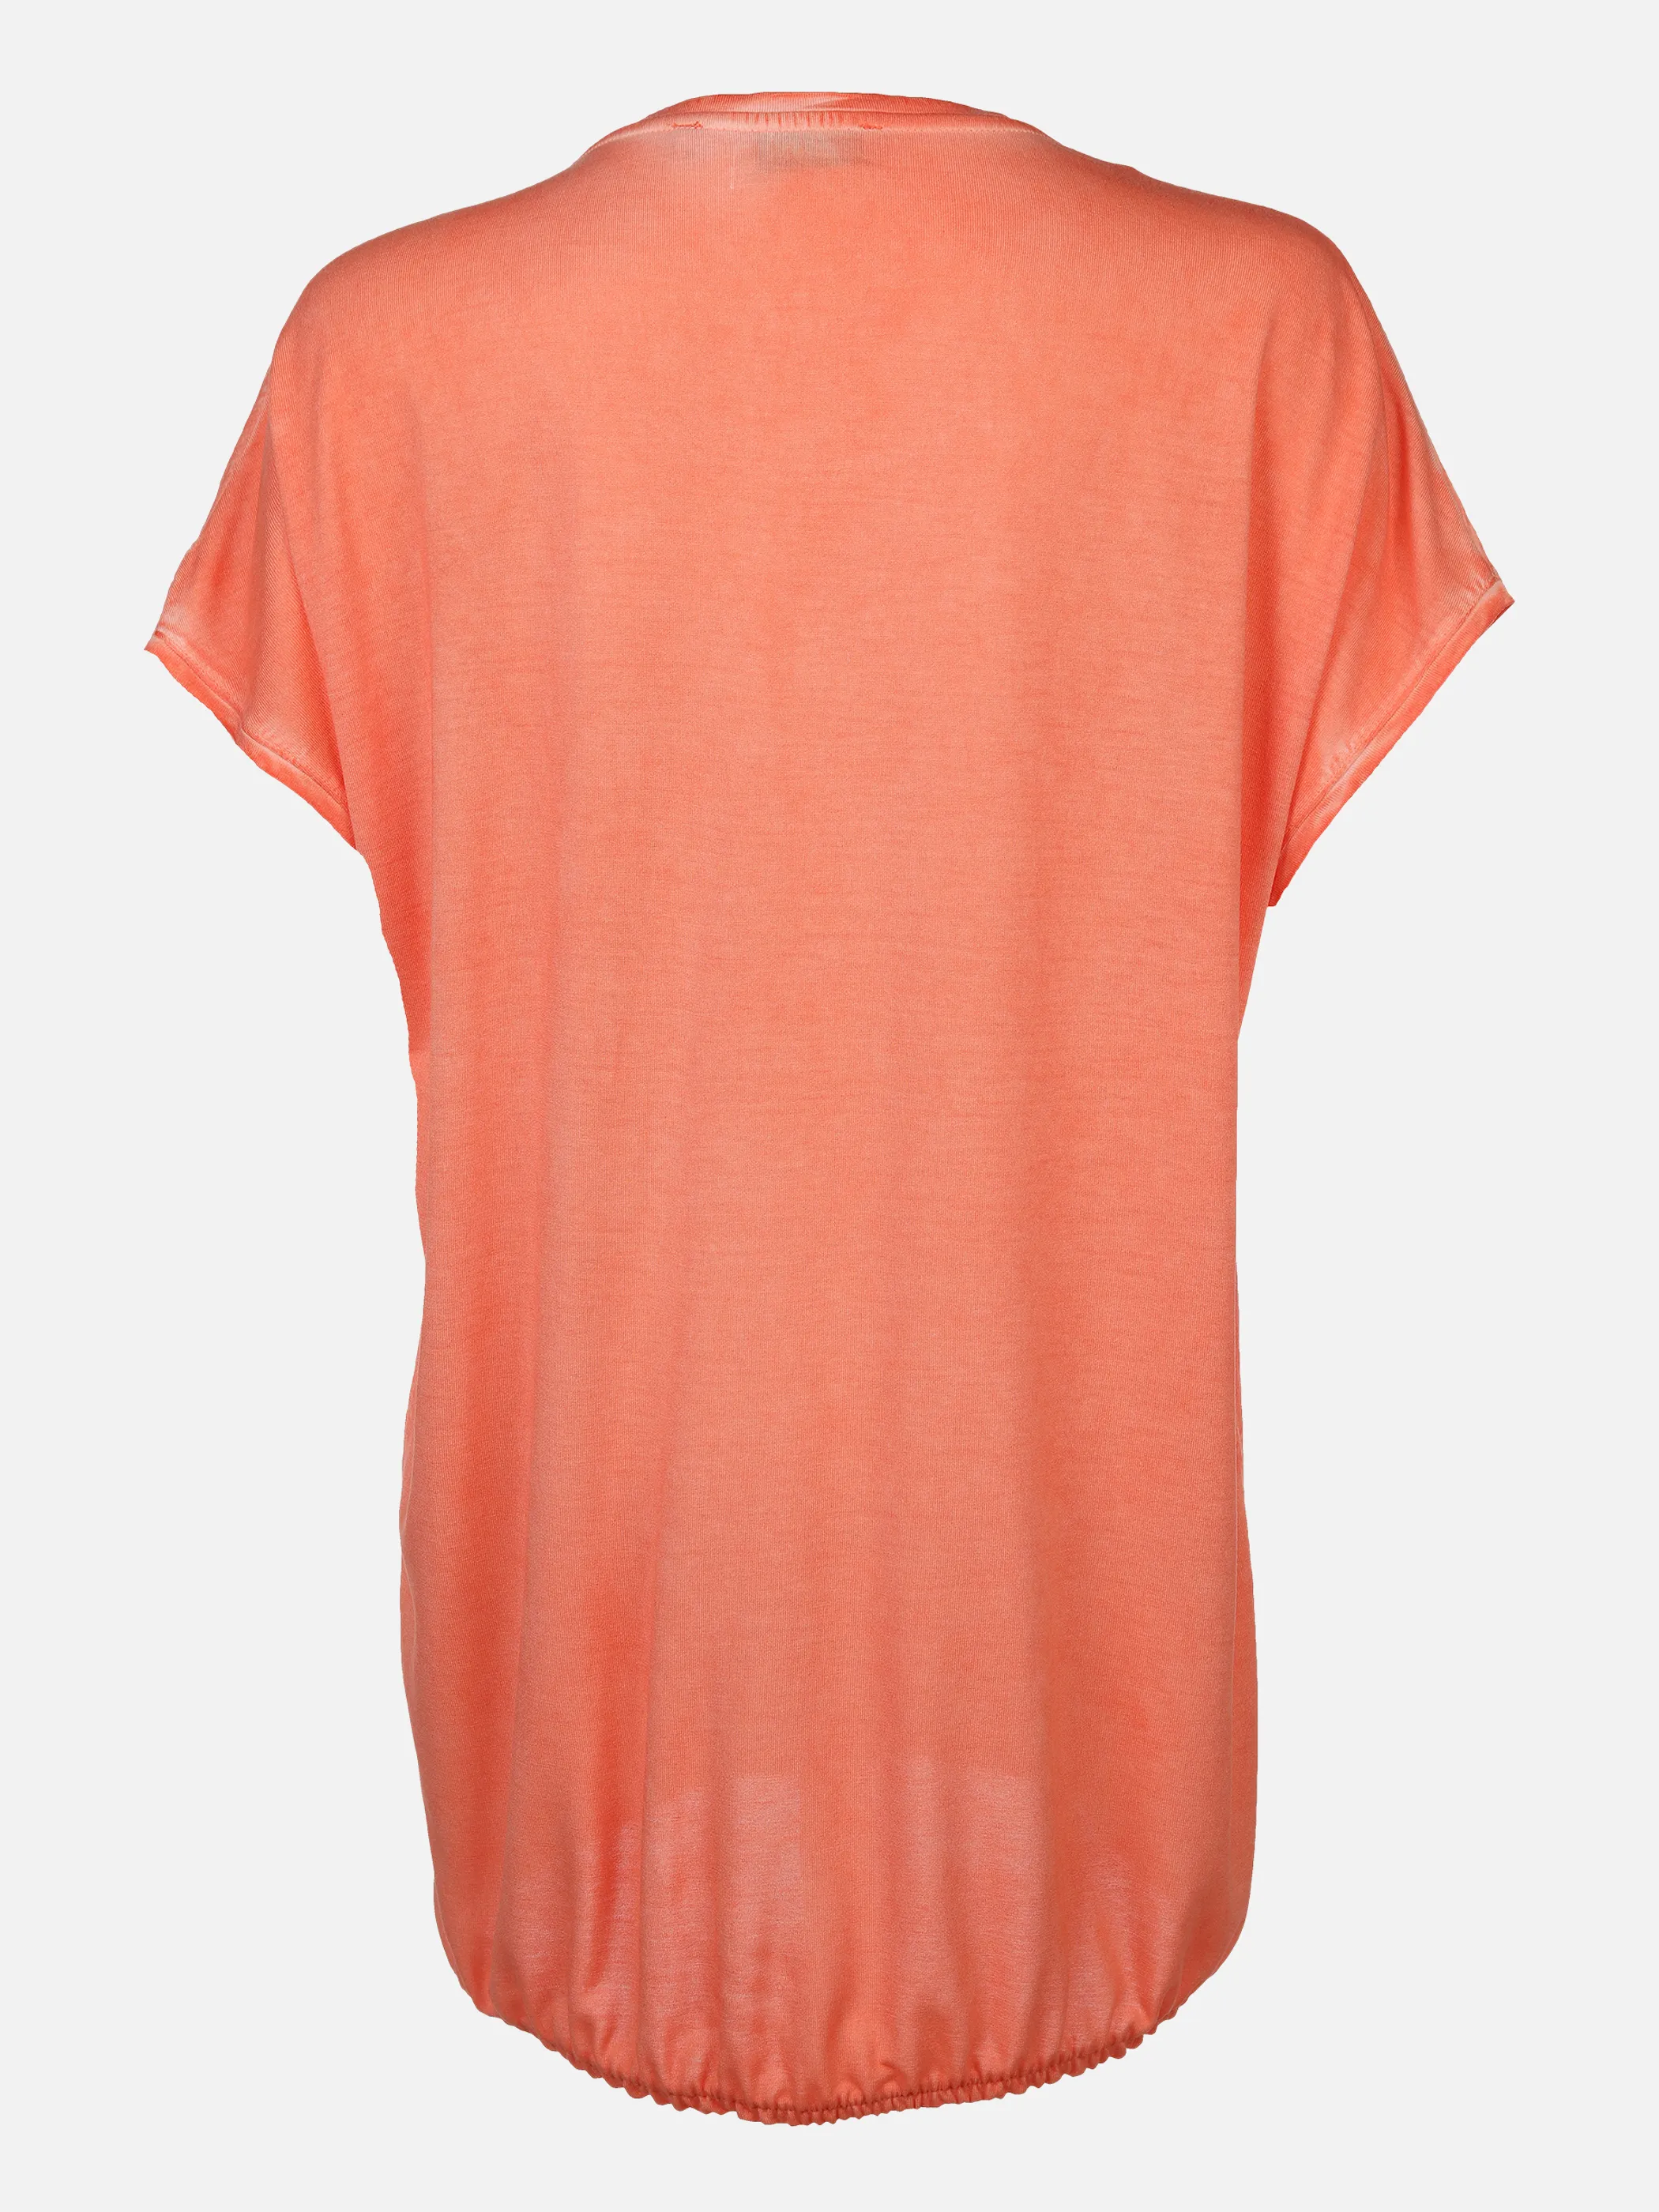 Lisa Tossa Da-Materialmix-Shirt m.Frontpr Orange 878258 KORALLE 2